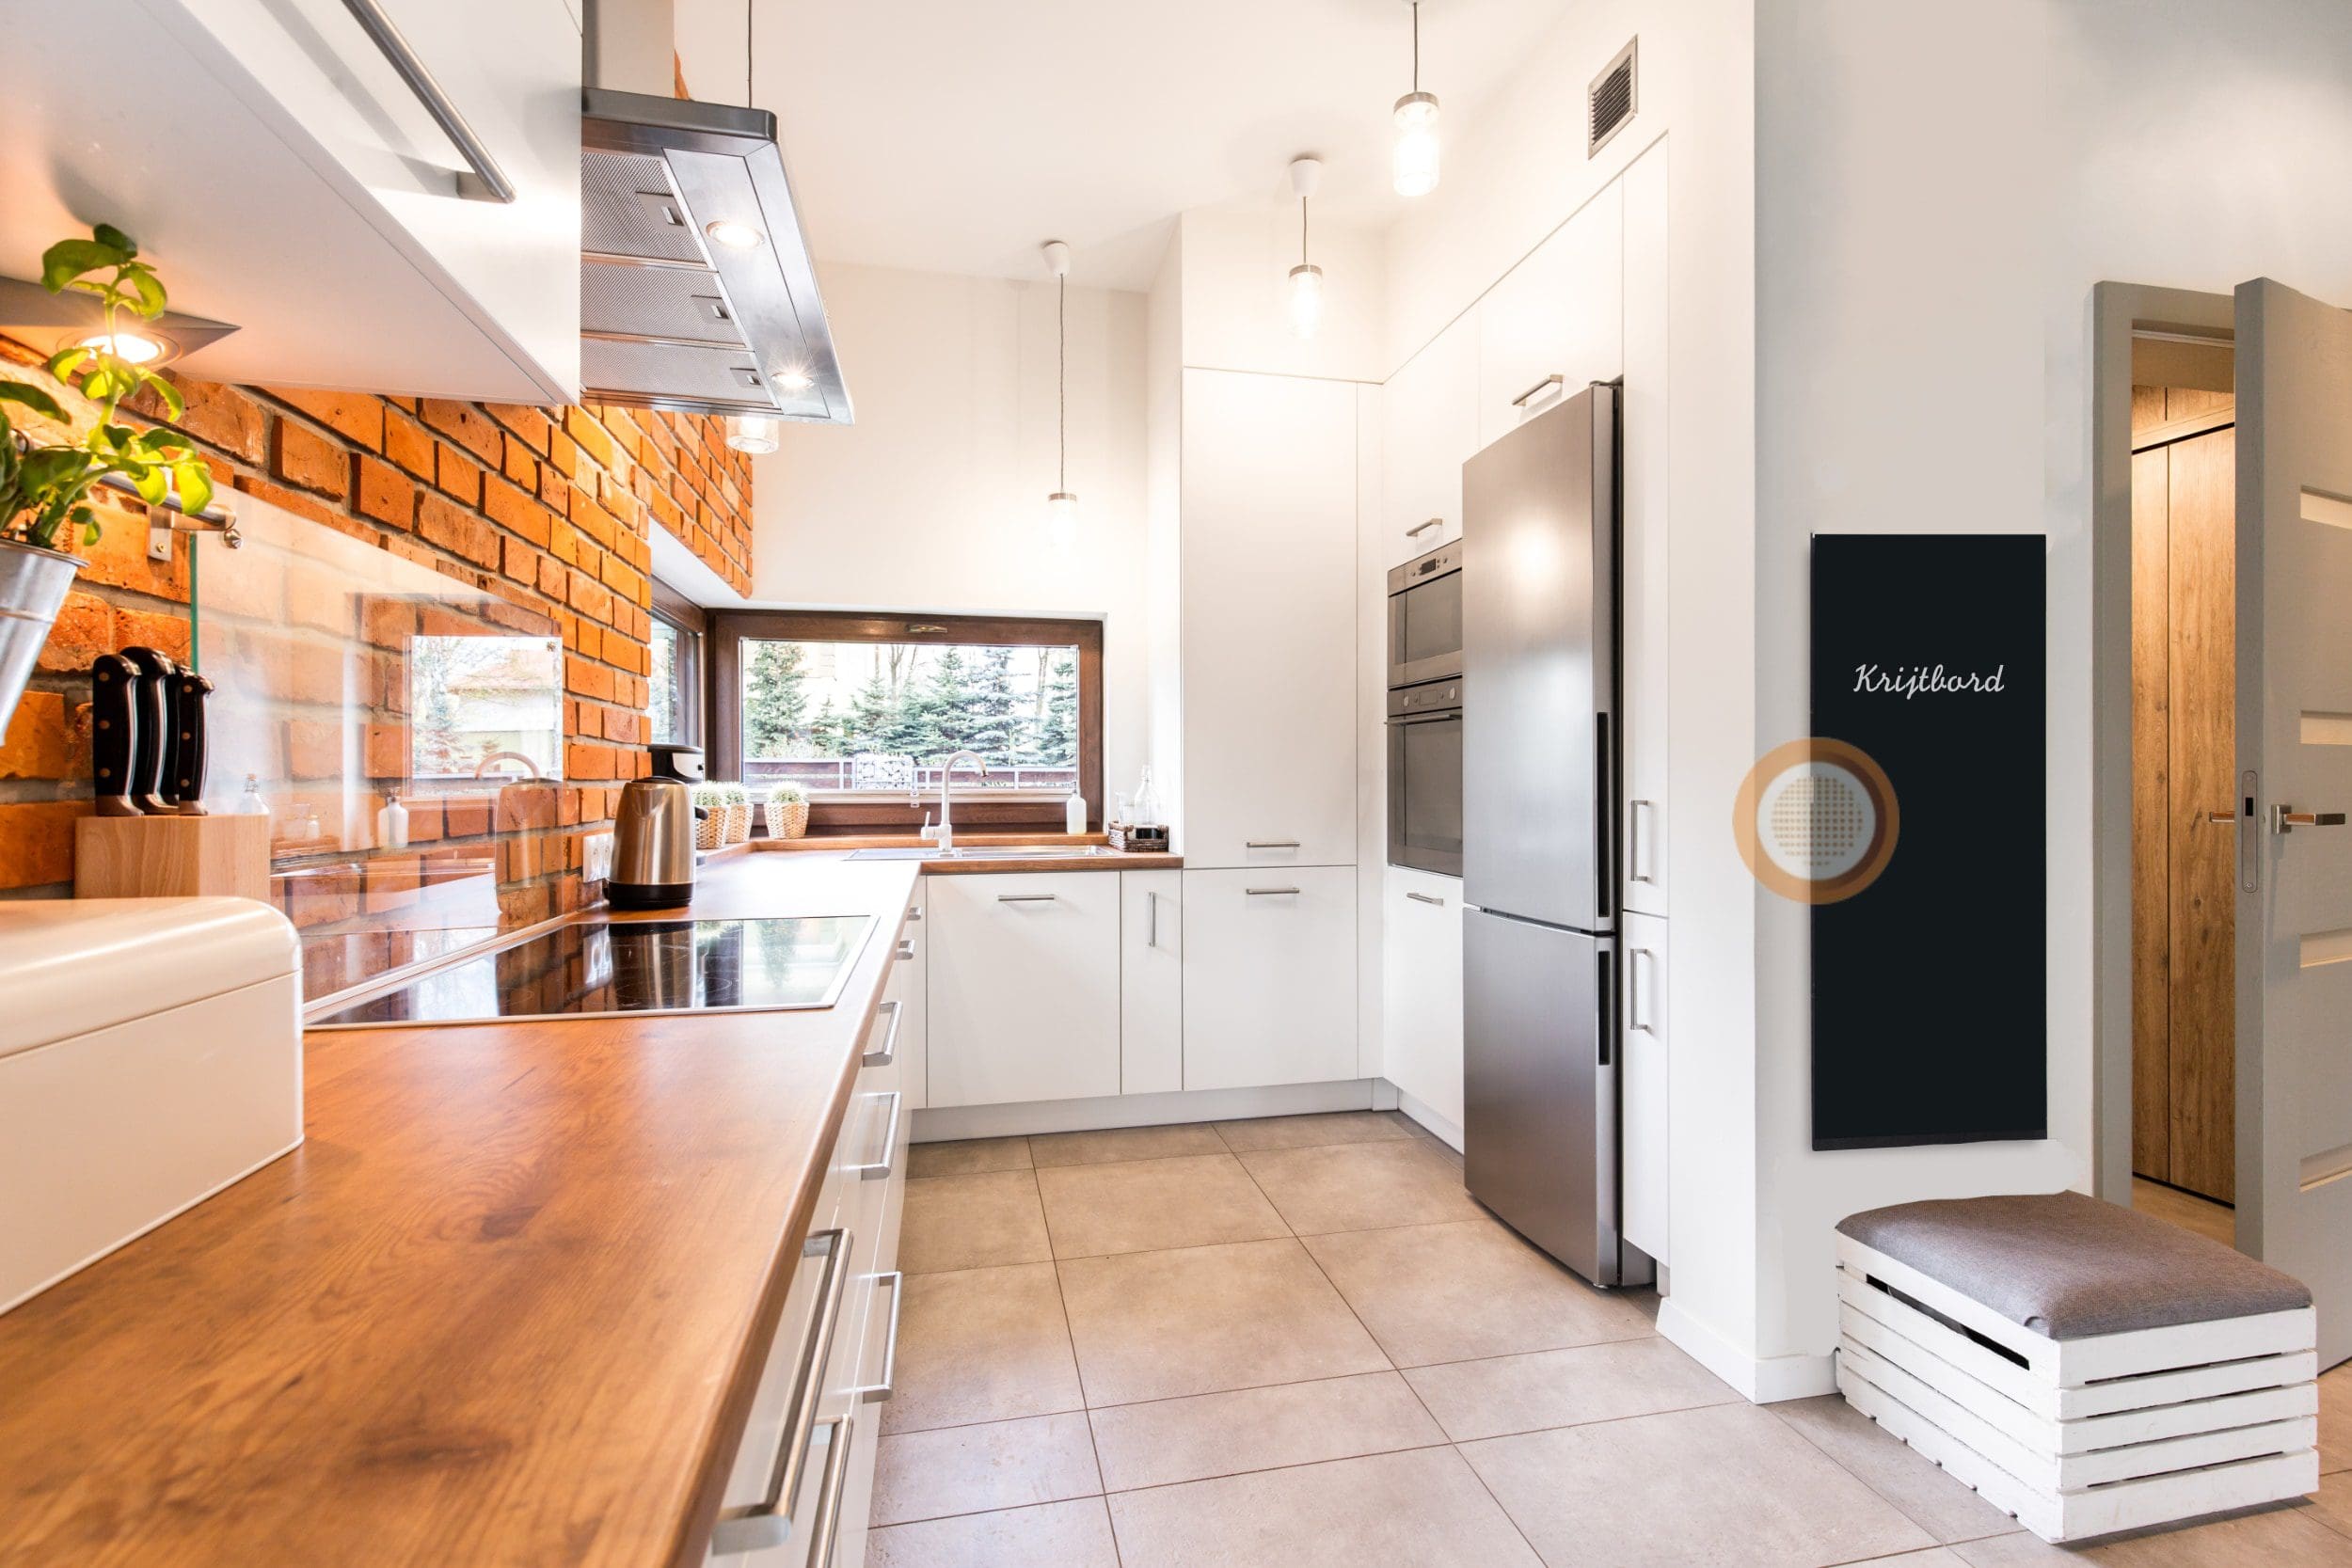 infrarood verwarming zwart infrarood paneel keuken krijtbord radiator keuken chauffages kopen krijtbord keuken verwarming infrarood